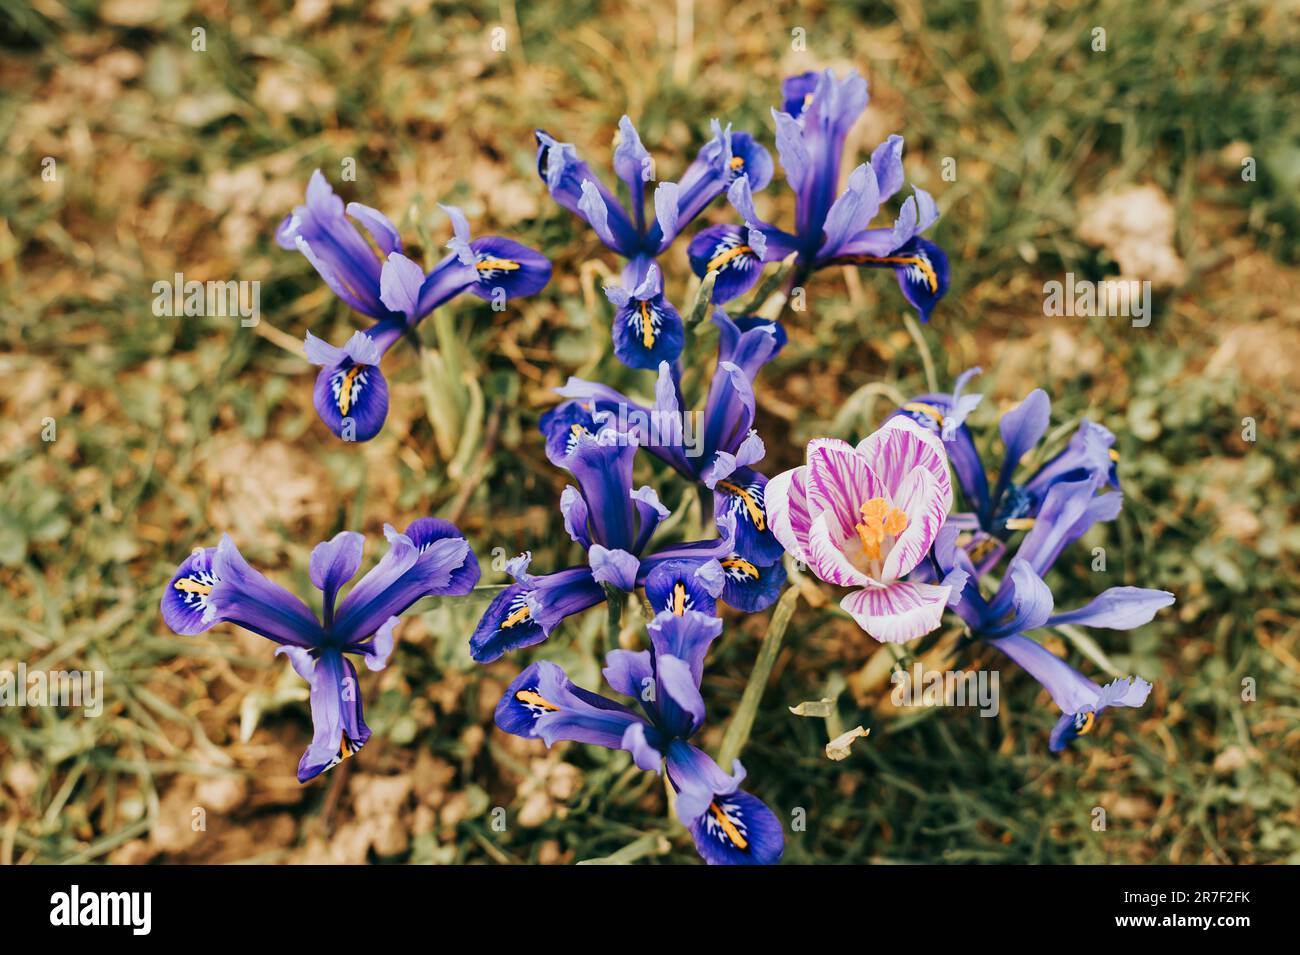 Violet iris flower growing in nature, summer seasonal floral background Stock Photo